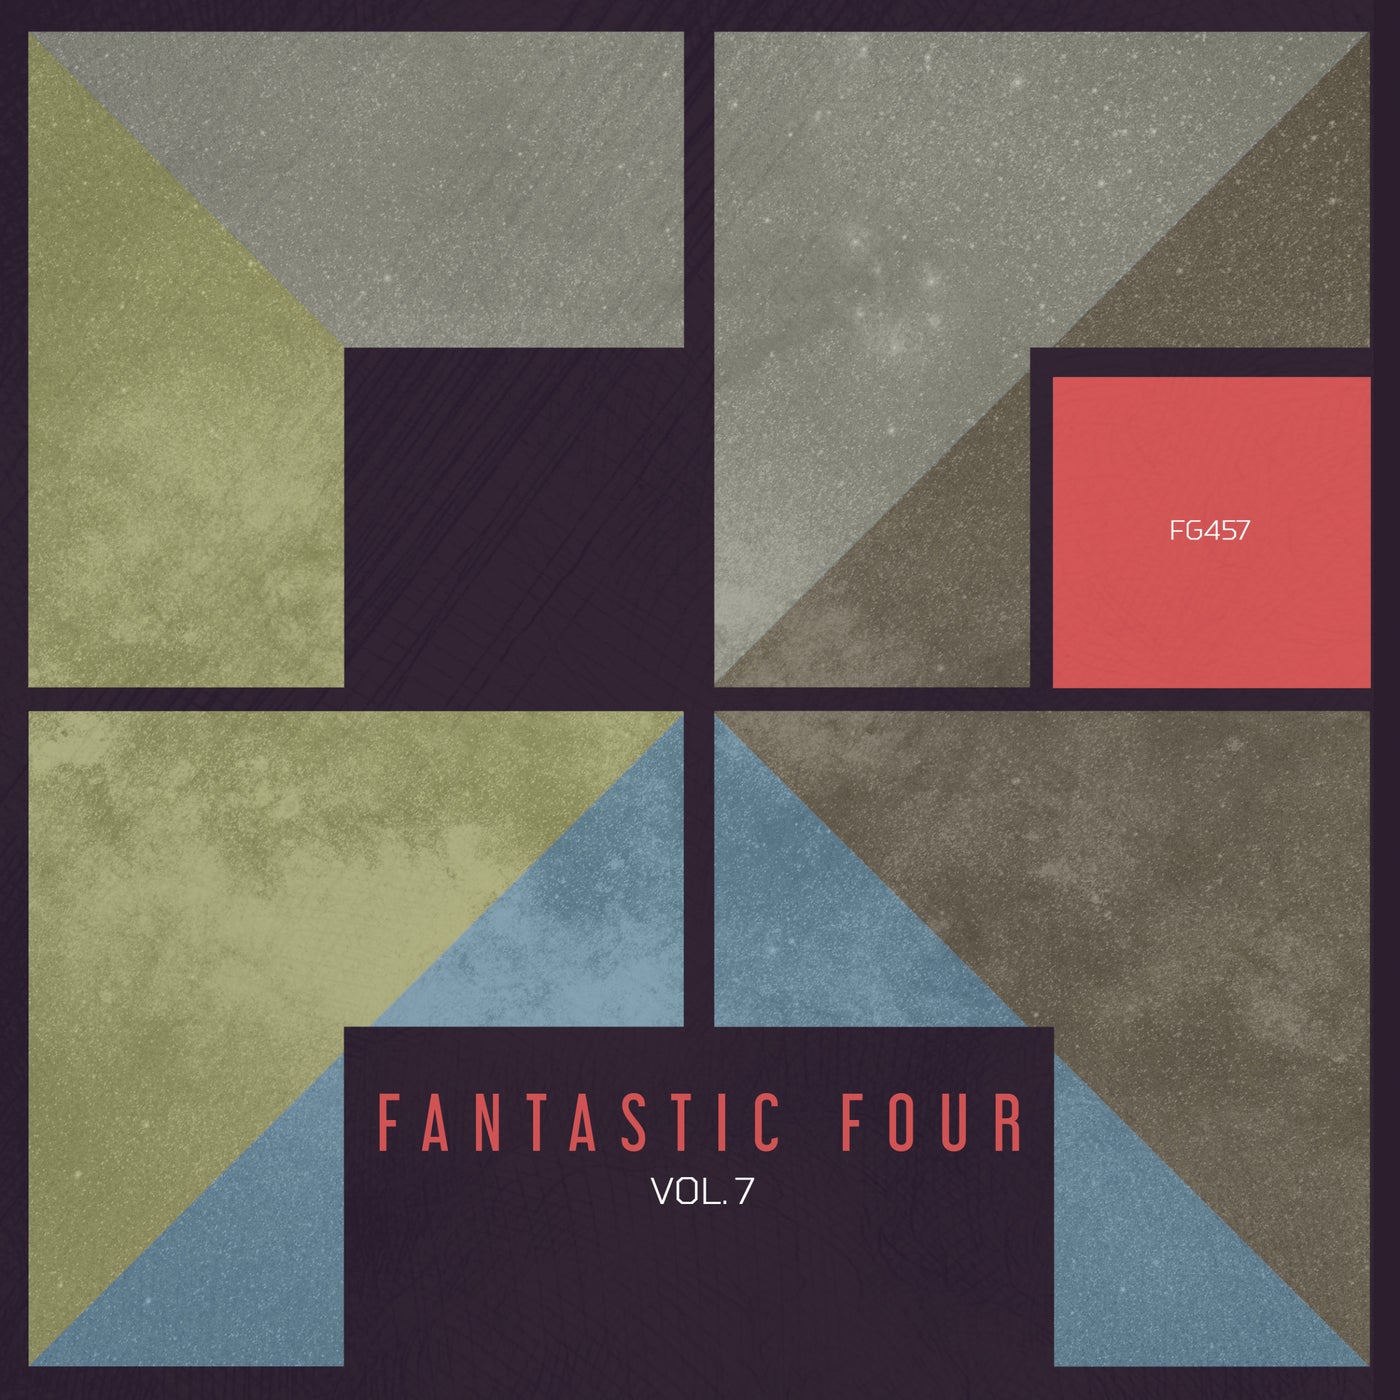 VA – Fantastc Four, Vol. 7 [FG457]